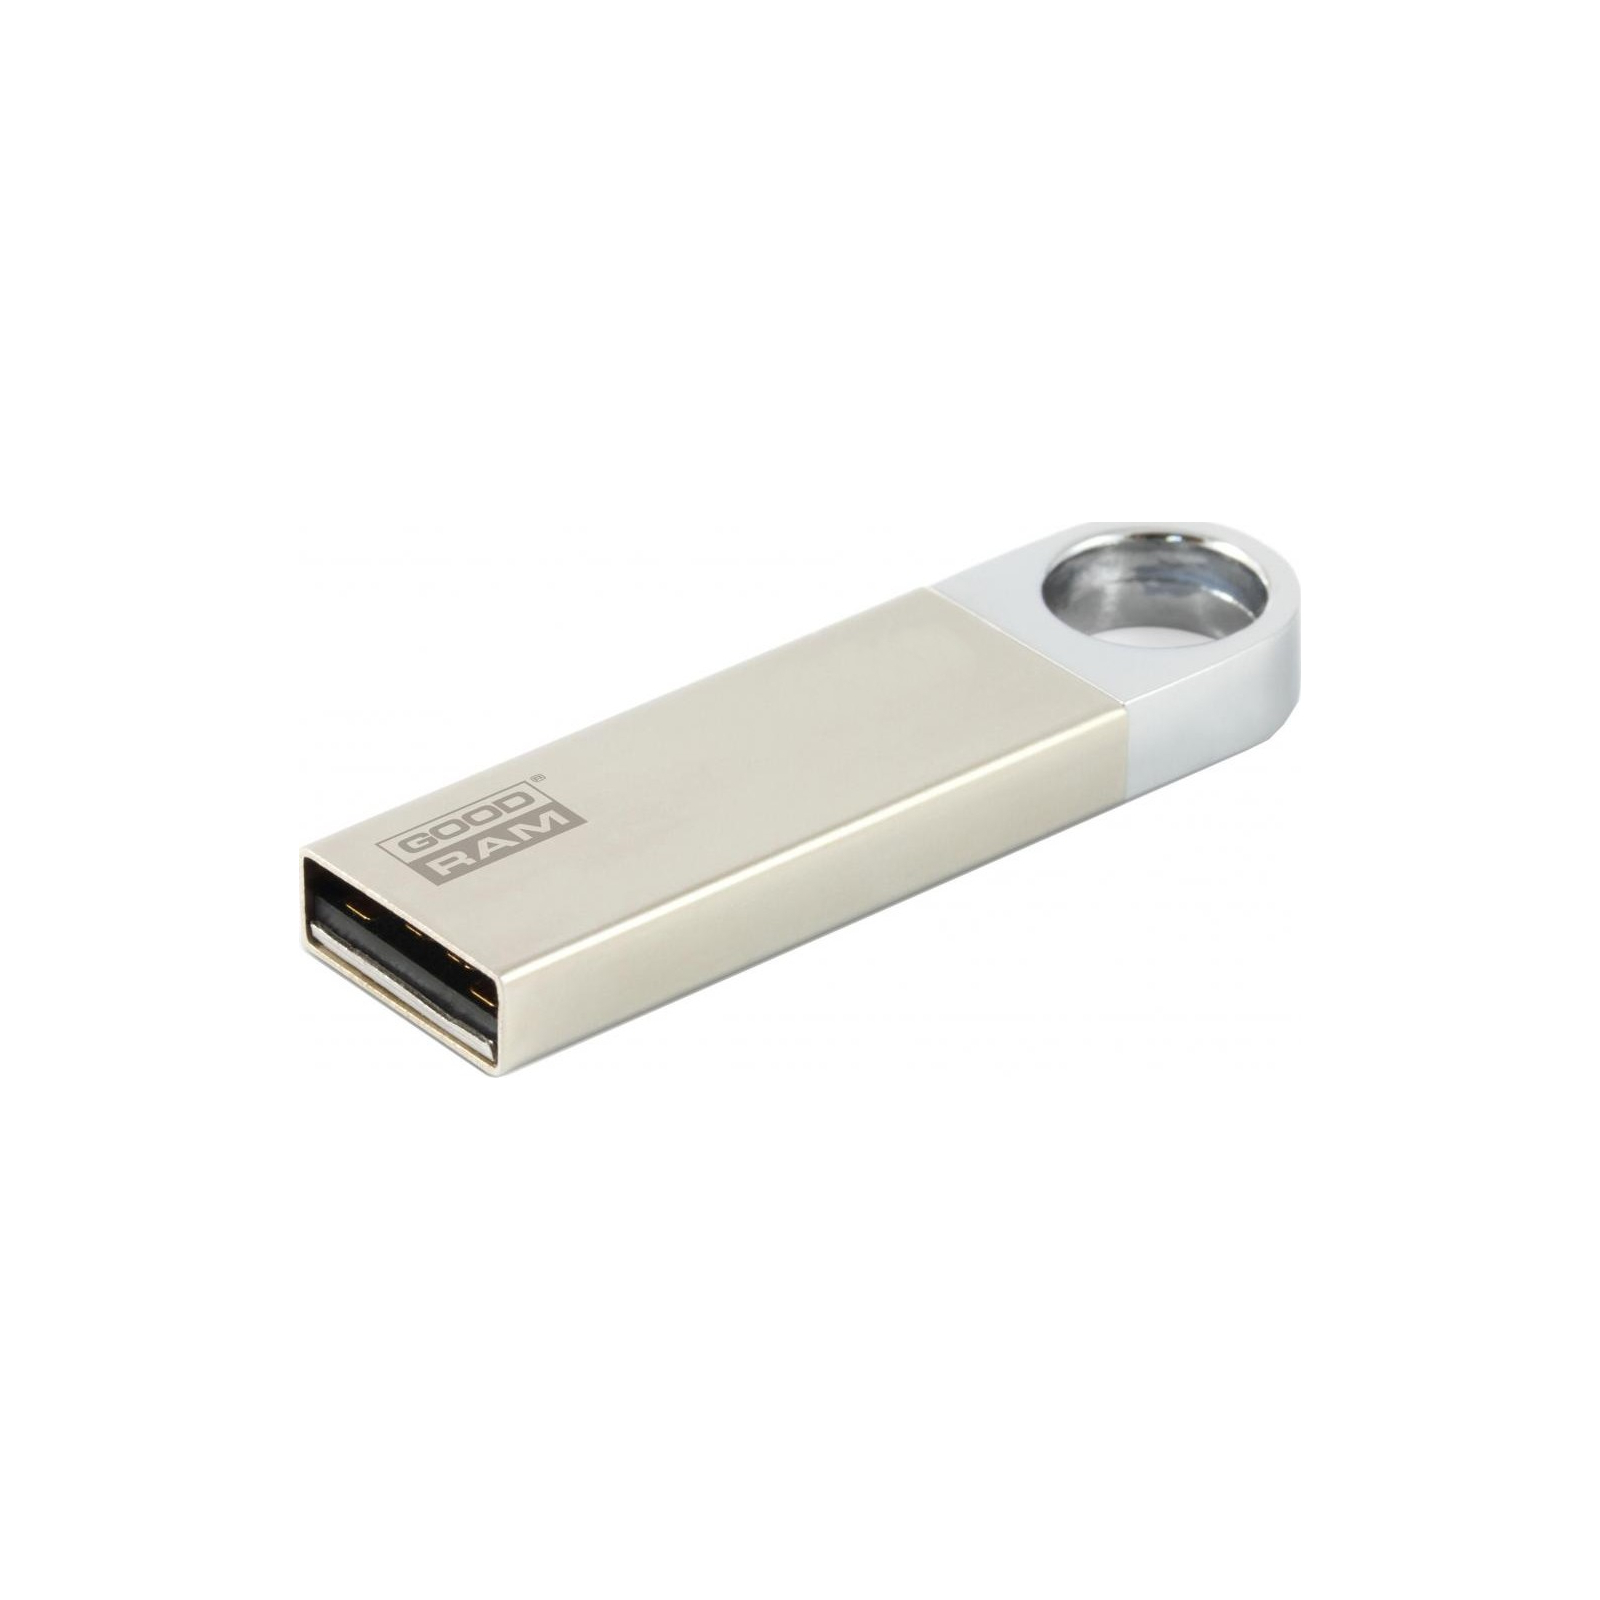 USB флеш накопитель Goodram 8GB Unity Silver USB 2.0 (UUN2-0080S0R11) изображение 2